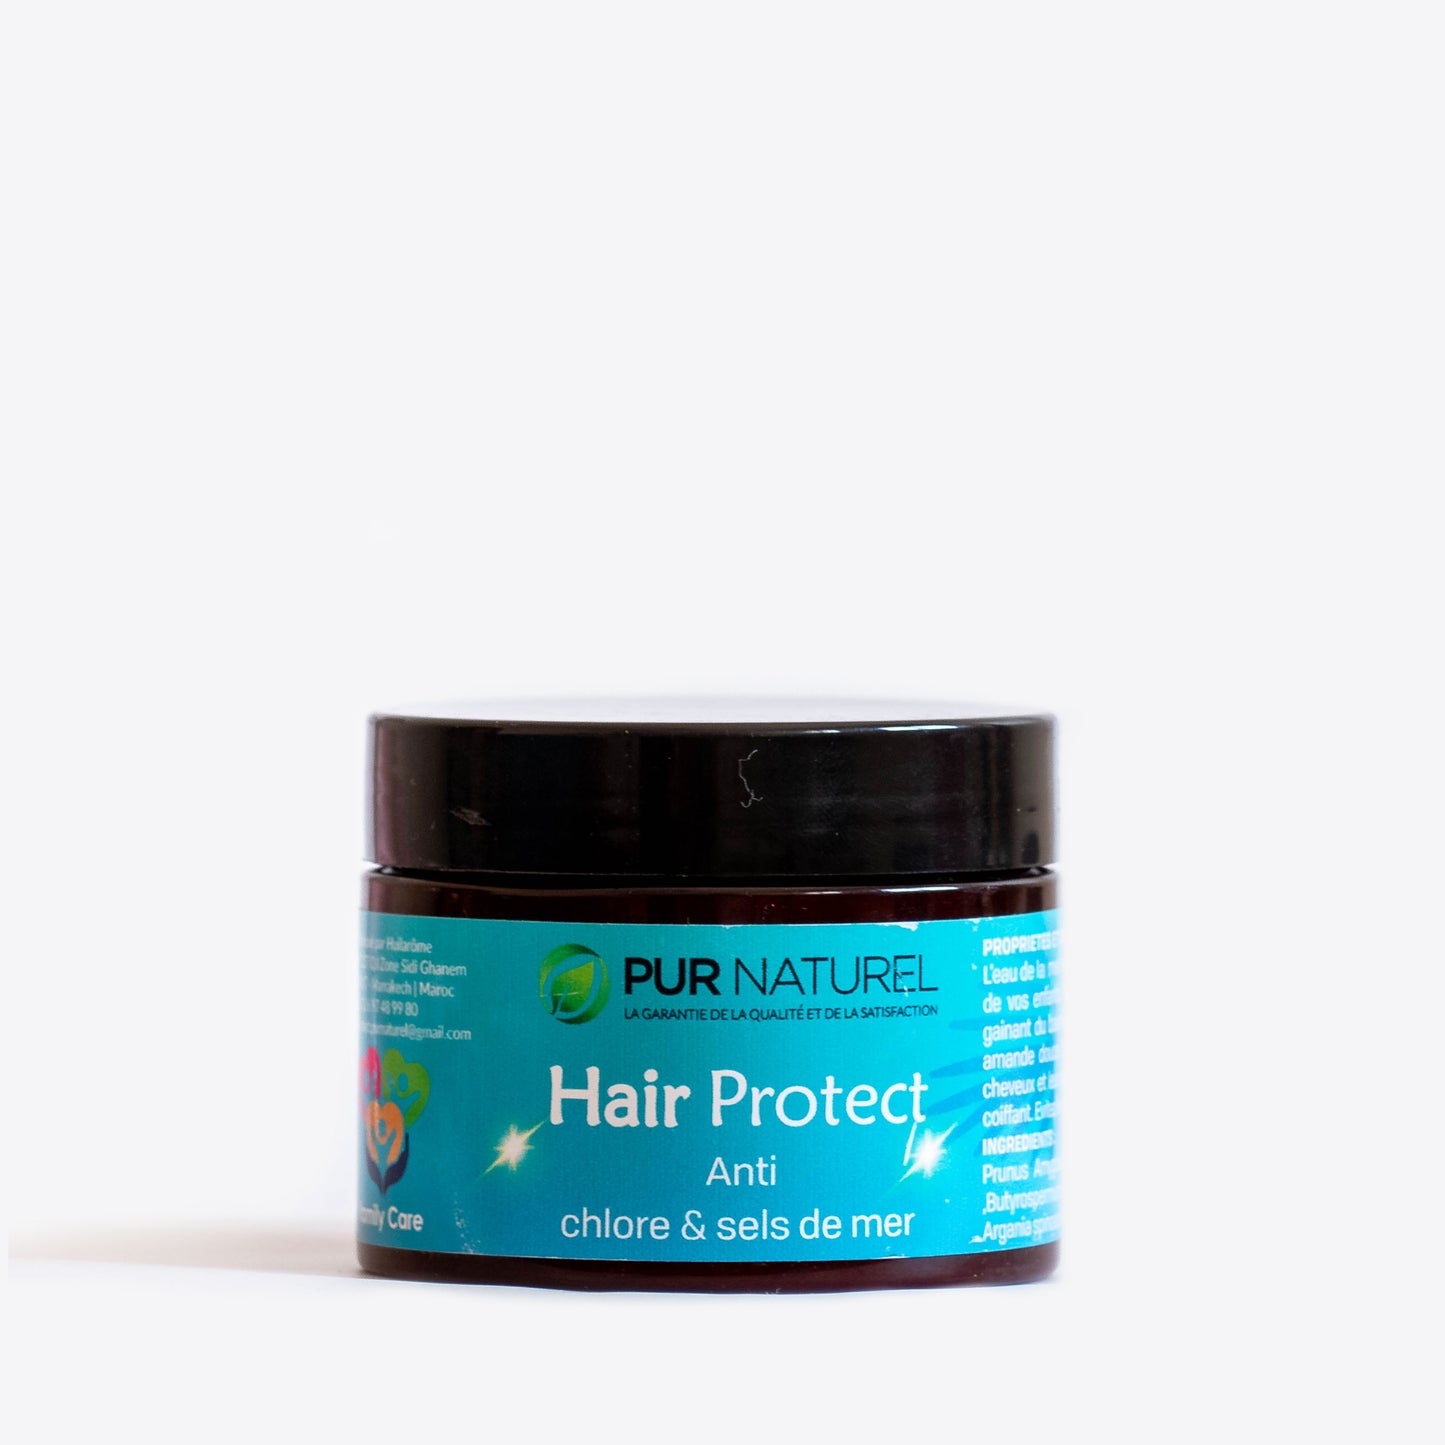 Hair Protect - Anti chlore & sels de mer - 125g